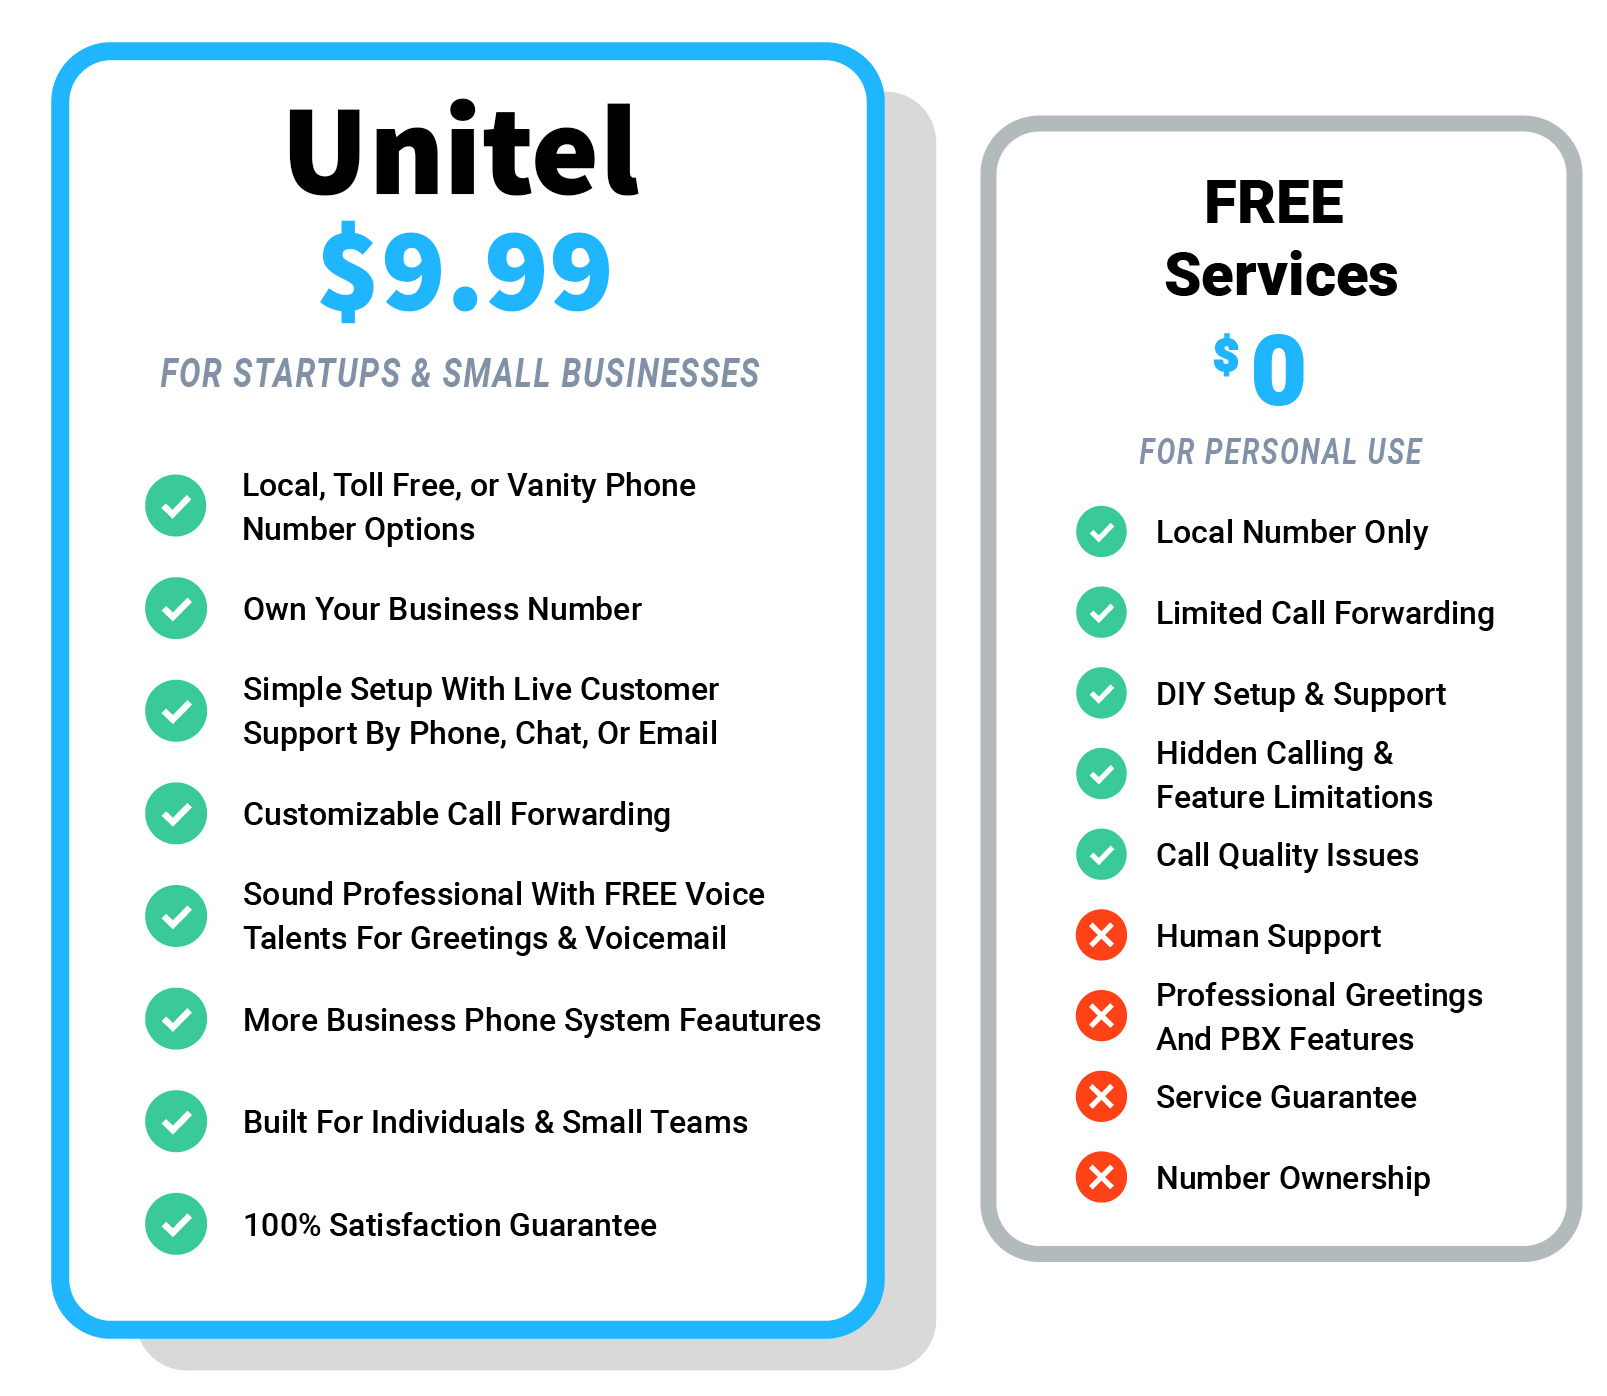 UniTel Voice Vs "Free" Services